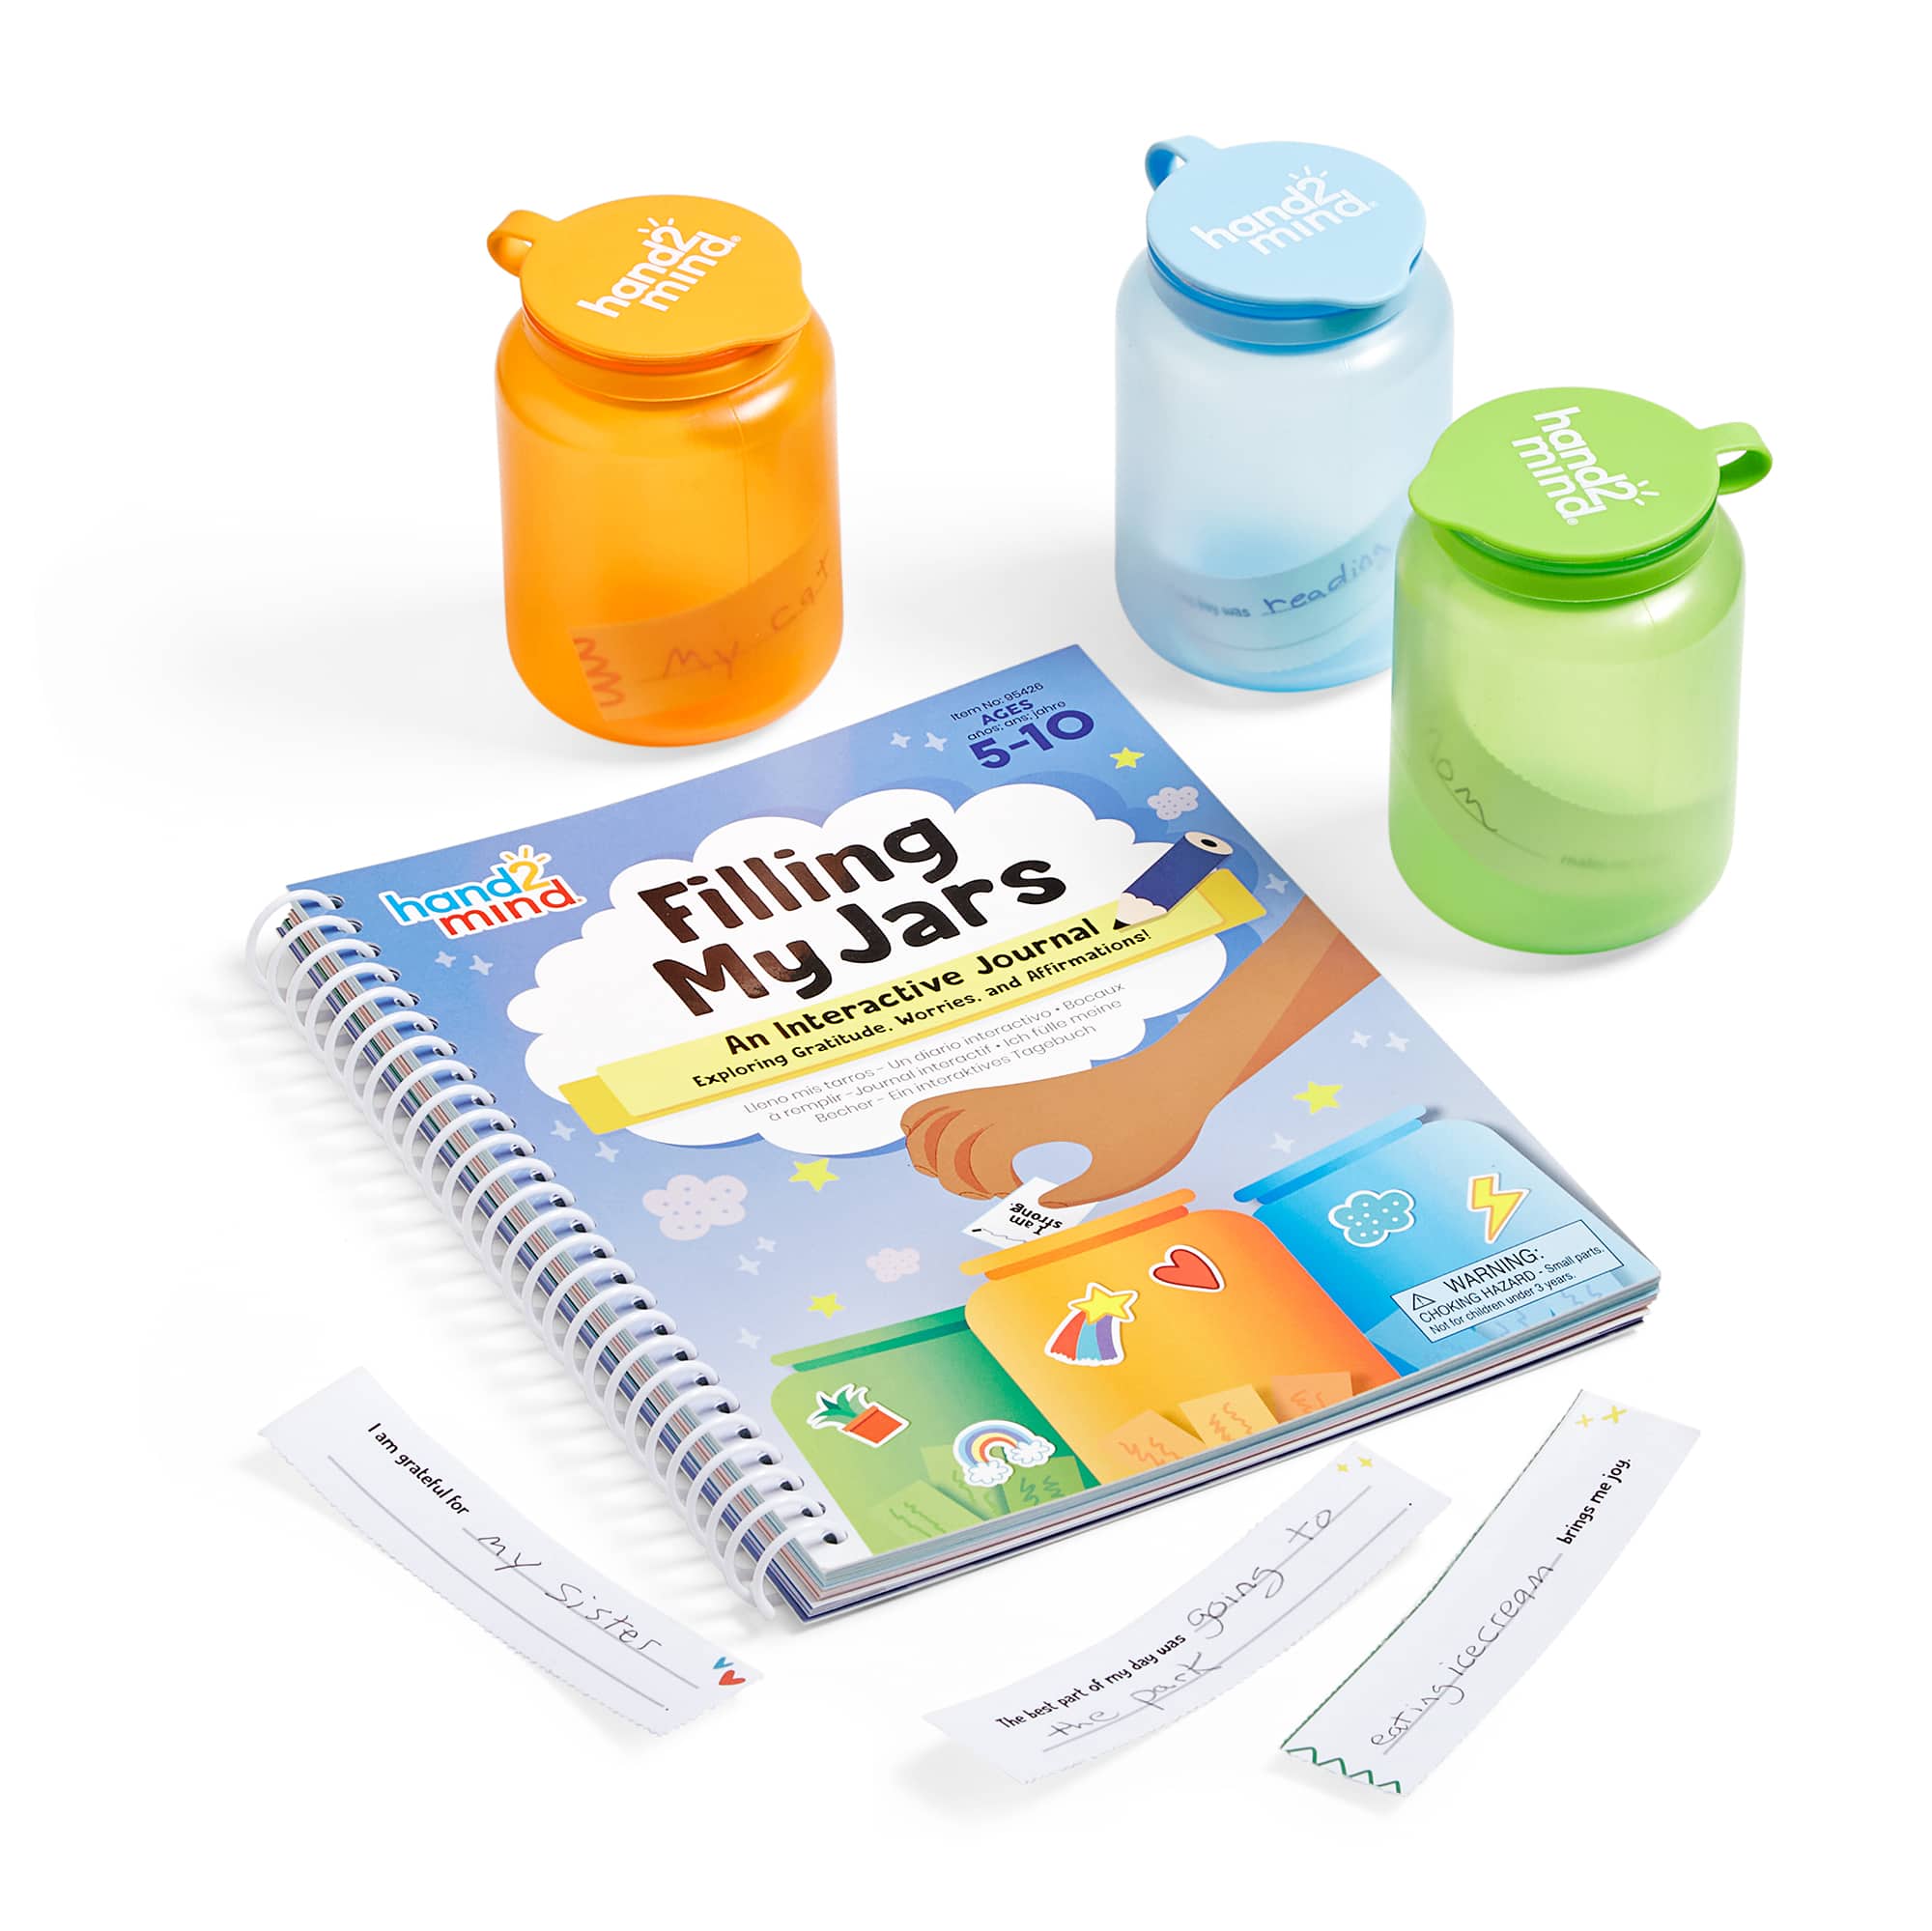 hand2mind Mindful Jars Interactive Journal Activity Book